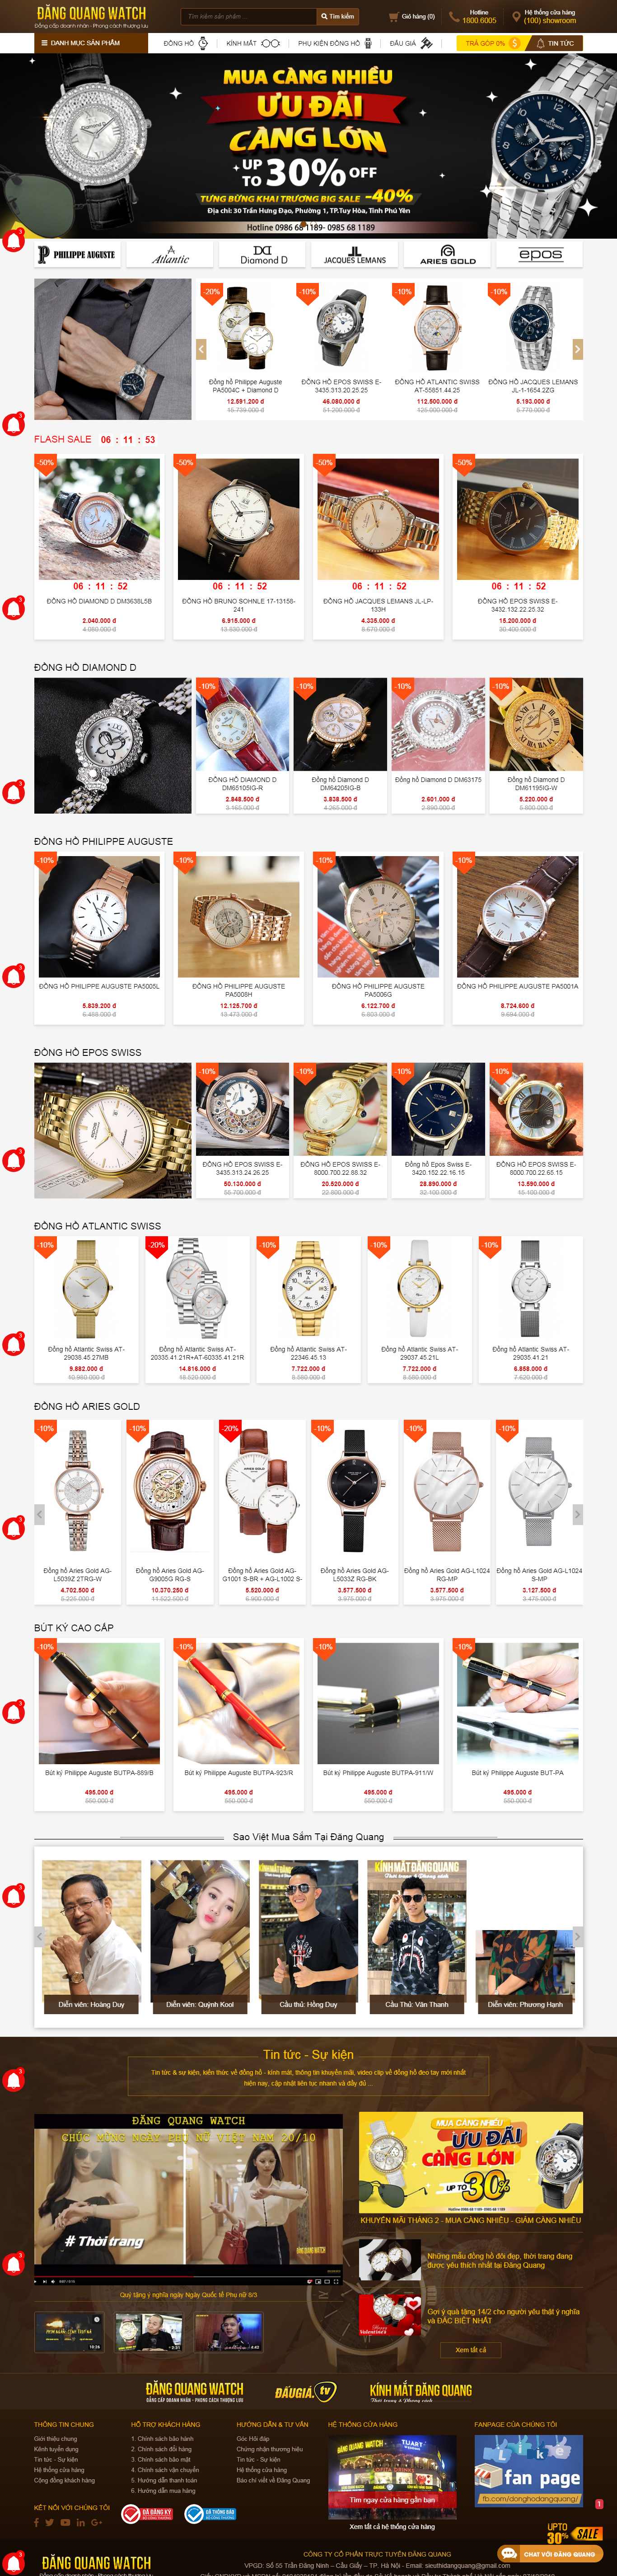 Thiết kế Website shop đồng hồ - www.dangquangwatch.vn